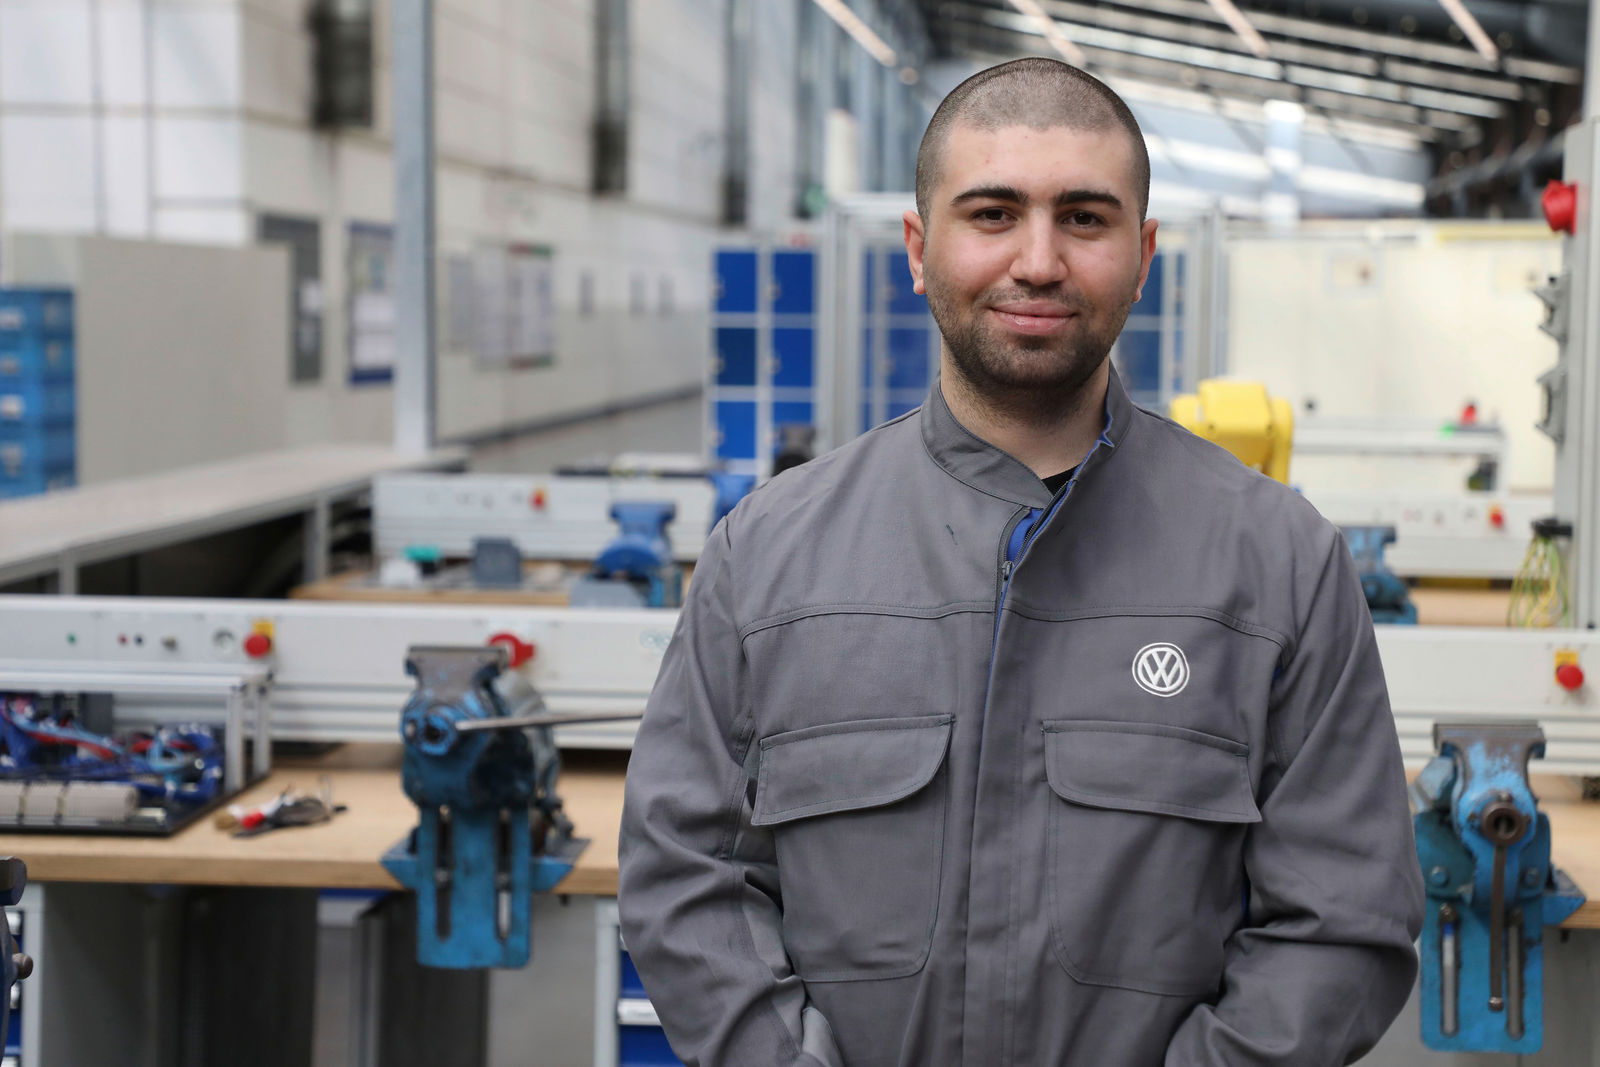 Volkswagen Konzern Flüchtlingshilfe: Maßnahmenpaket hilft 5.000 Menschen in Not